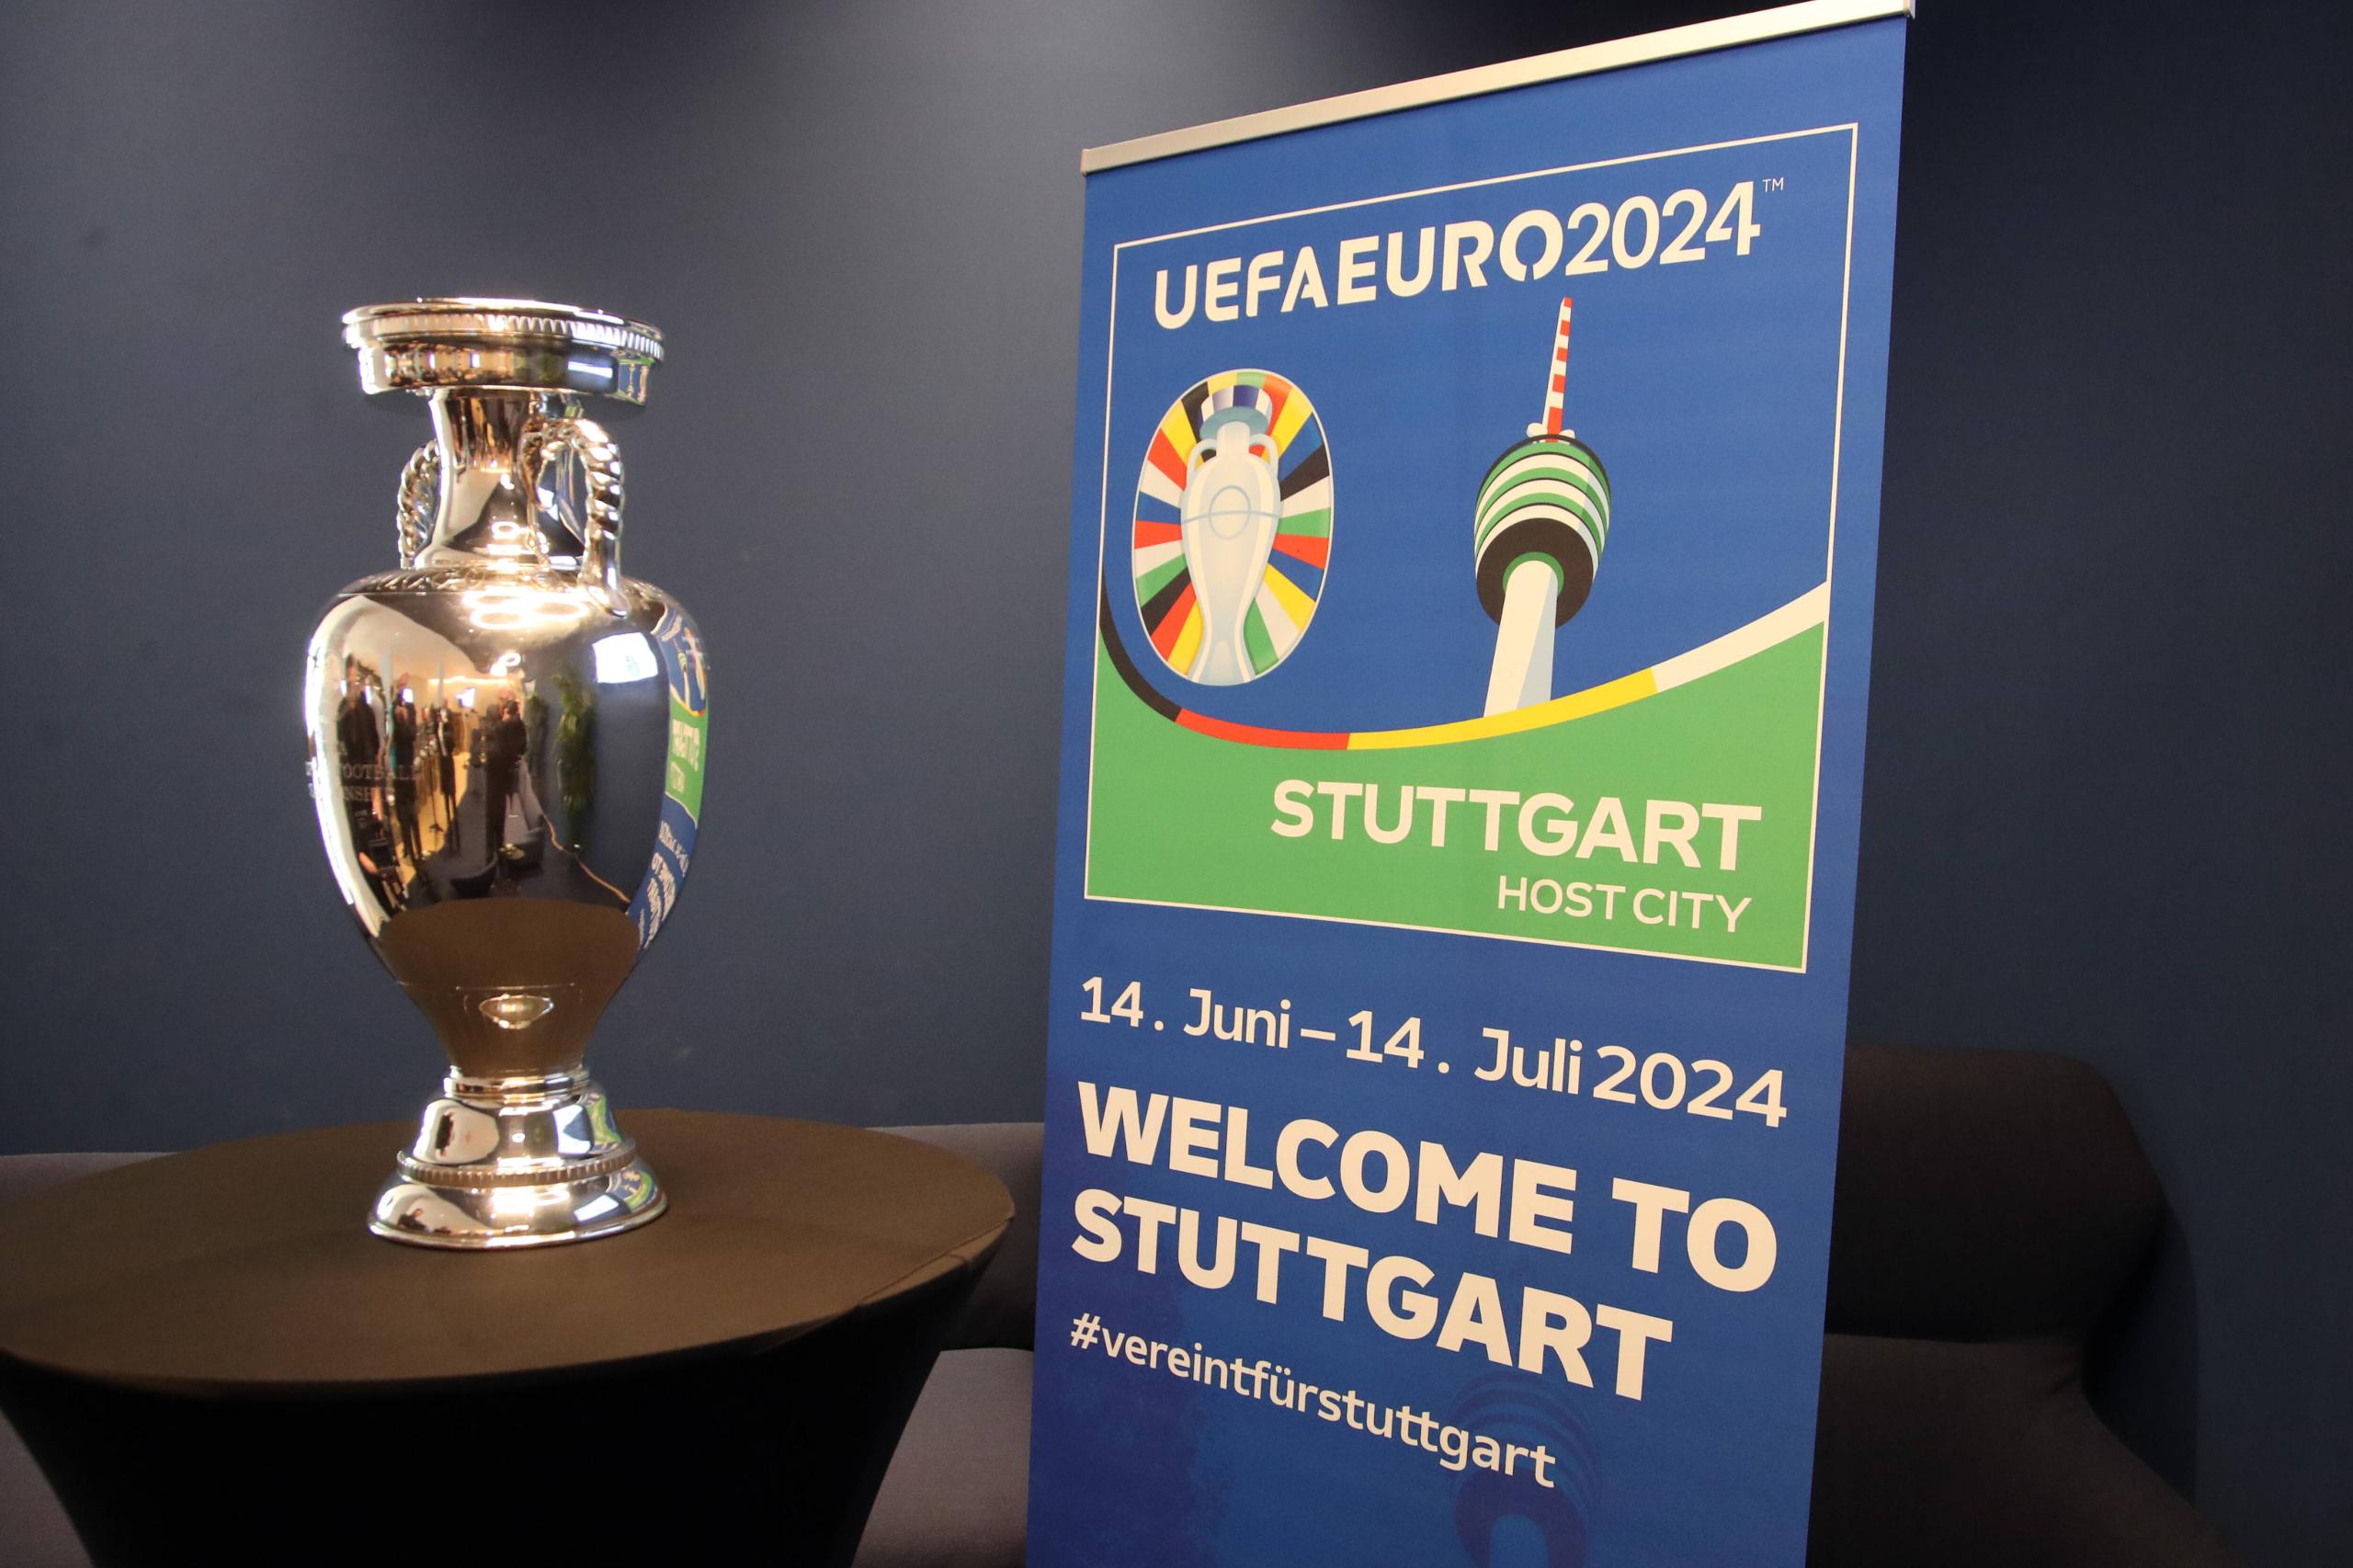 Чемпионат европы 2024 даты. Чемпионат Европы 2024. Эмблема евро 2024. Логотип чемпионата Европы 2024. Кубок евро 2024 по футболу.